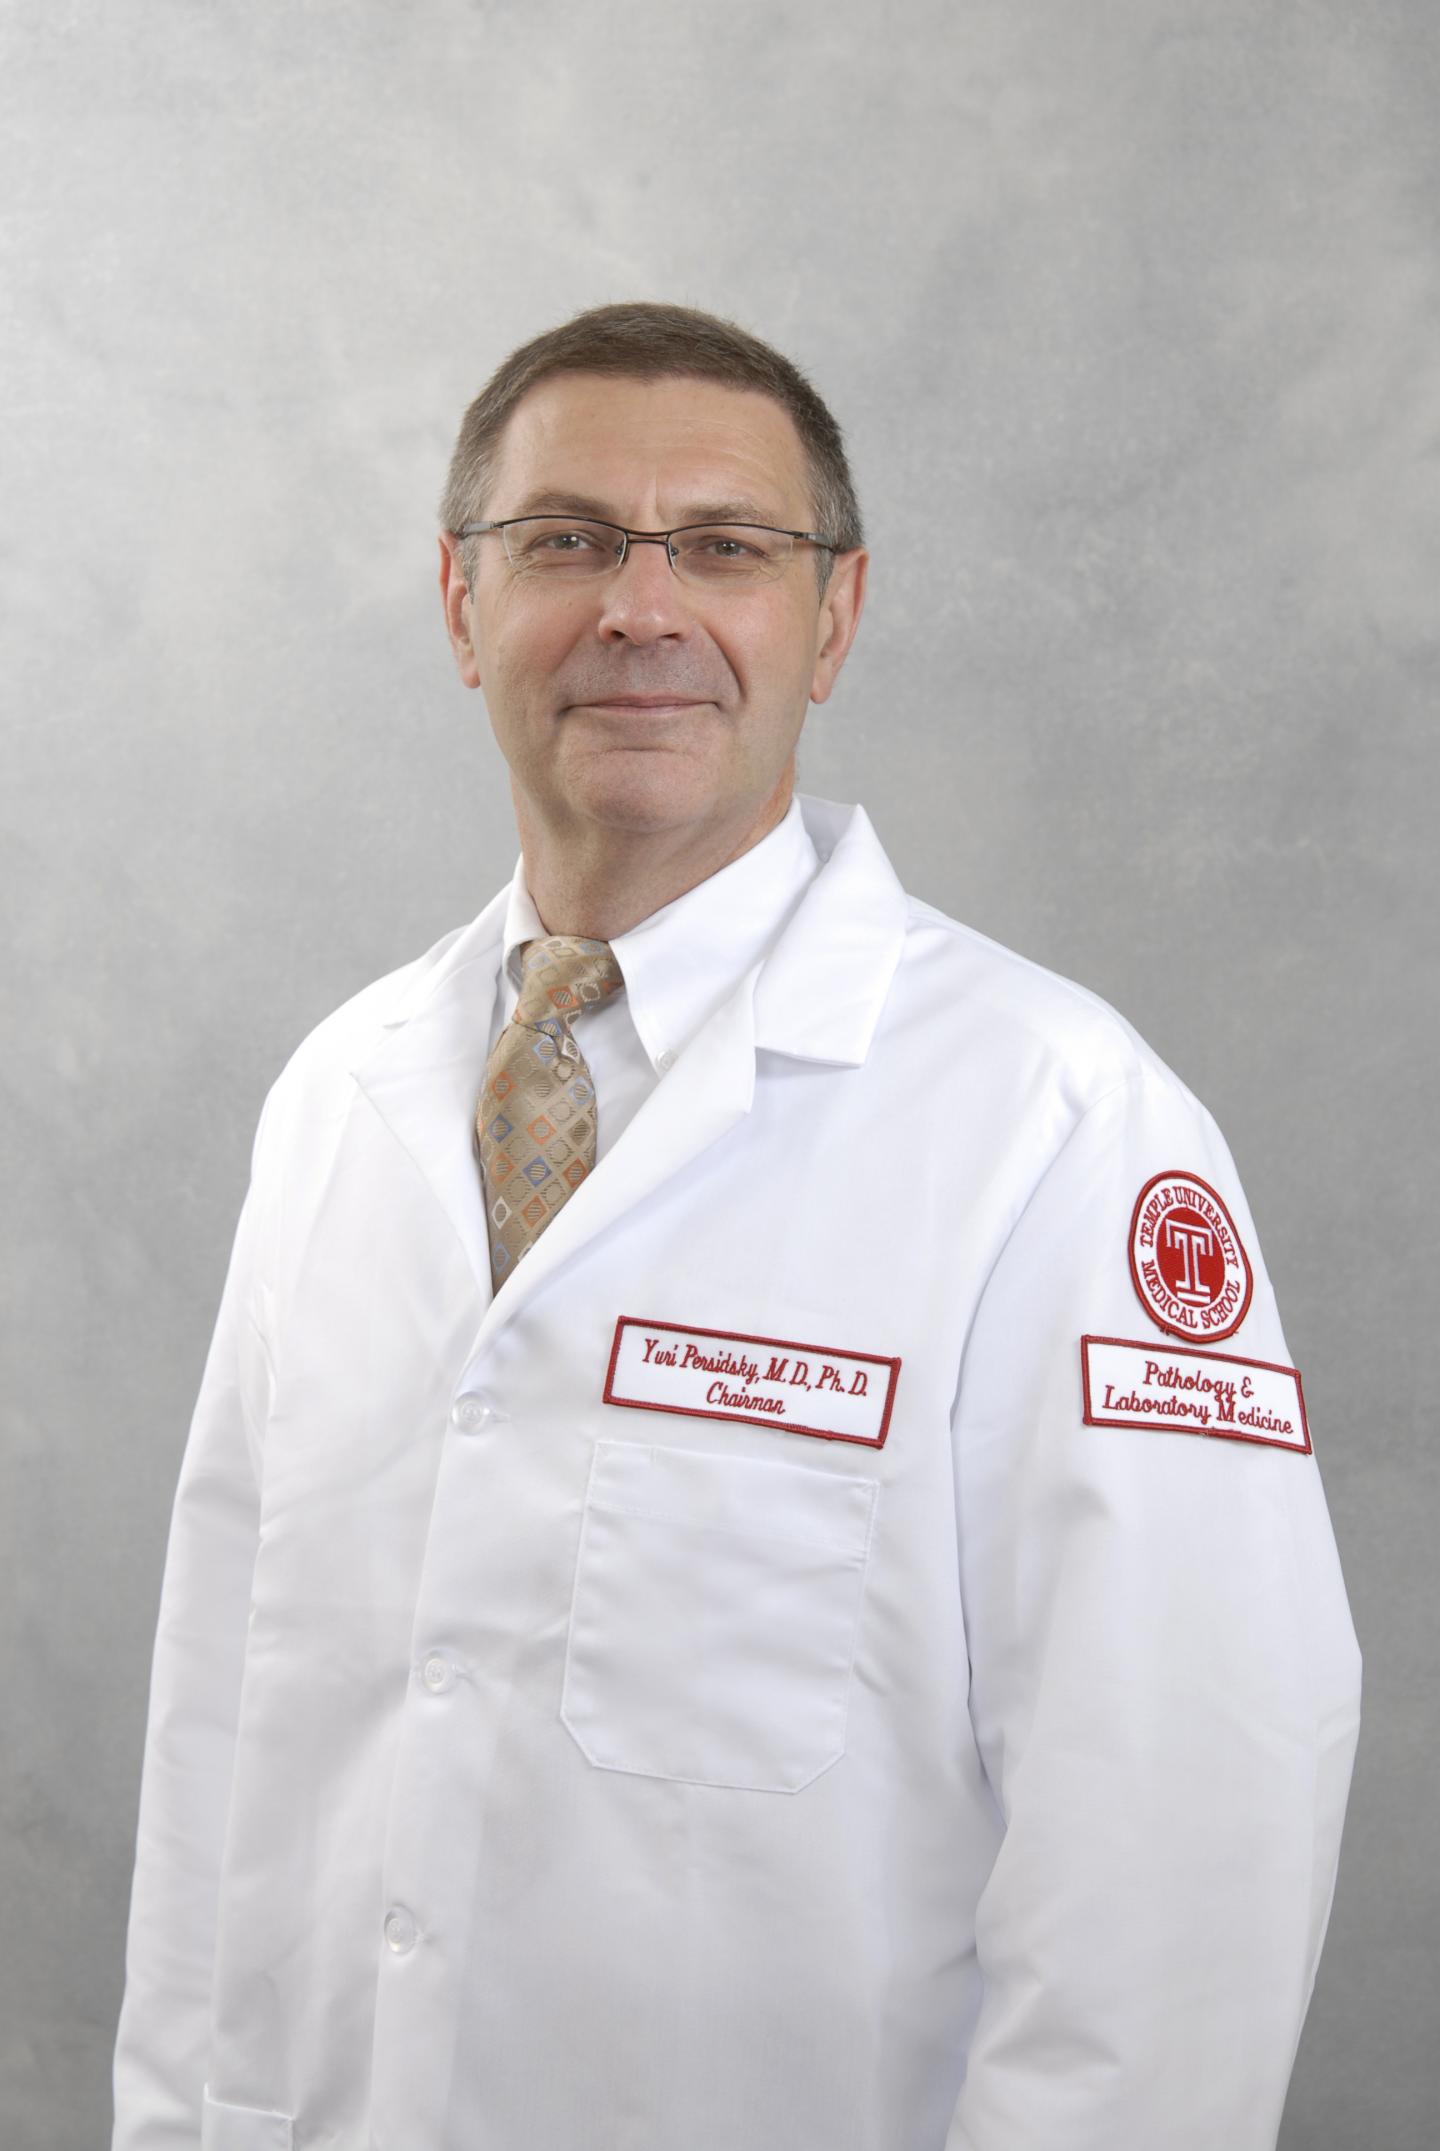 Yuri Persidsky, M.D., Ph.D., Temple University Health System